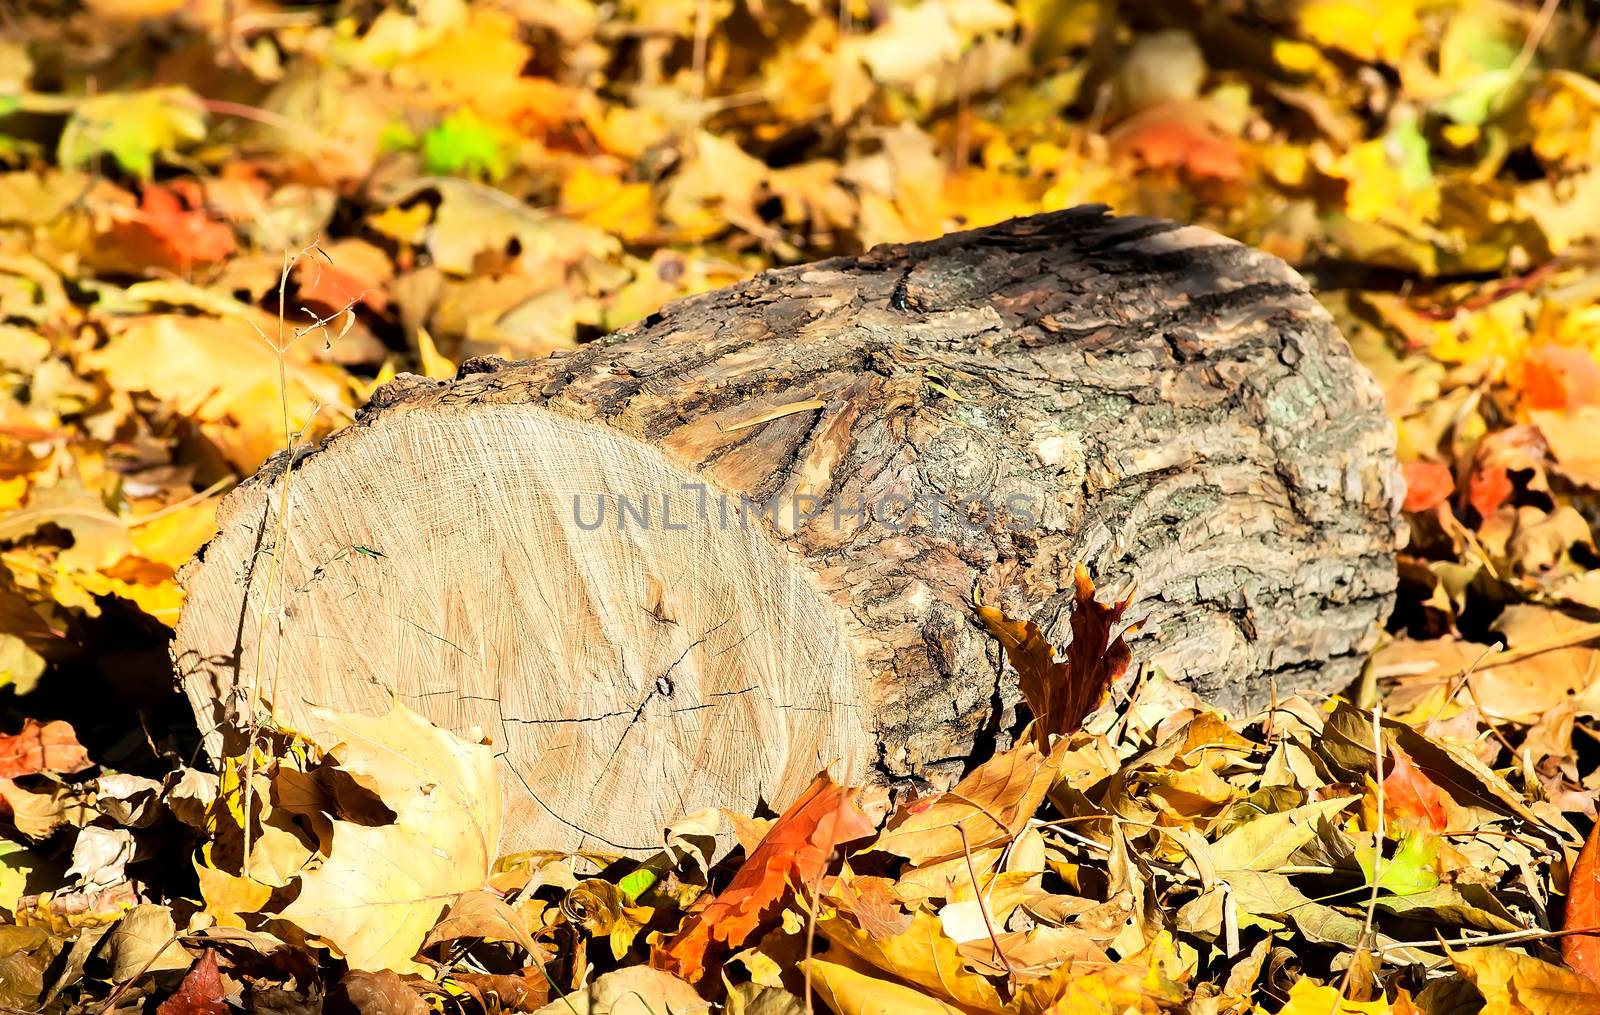 Oak logs on fallen colorful autumn leaves by Cipariss